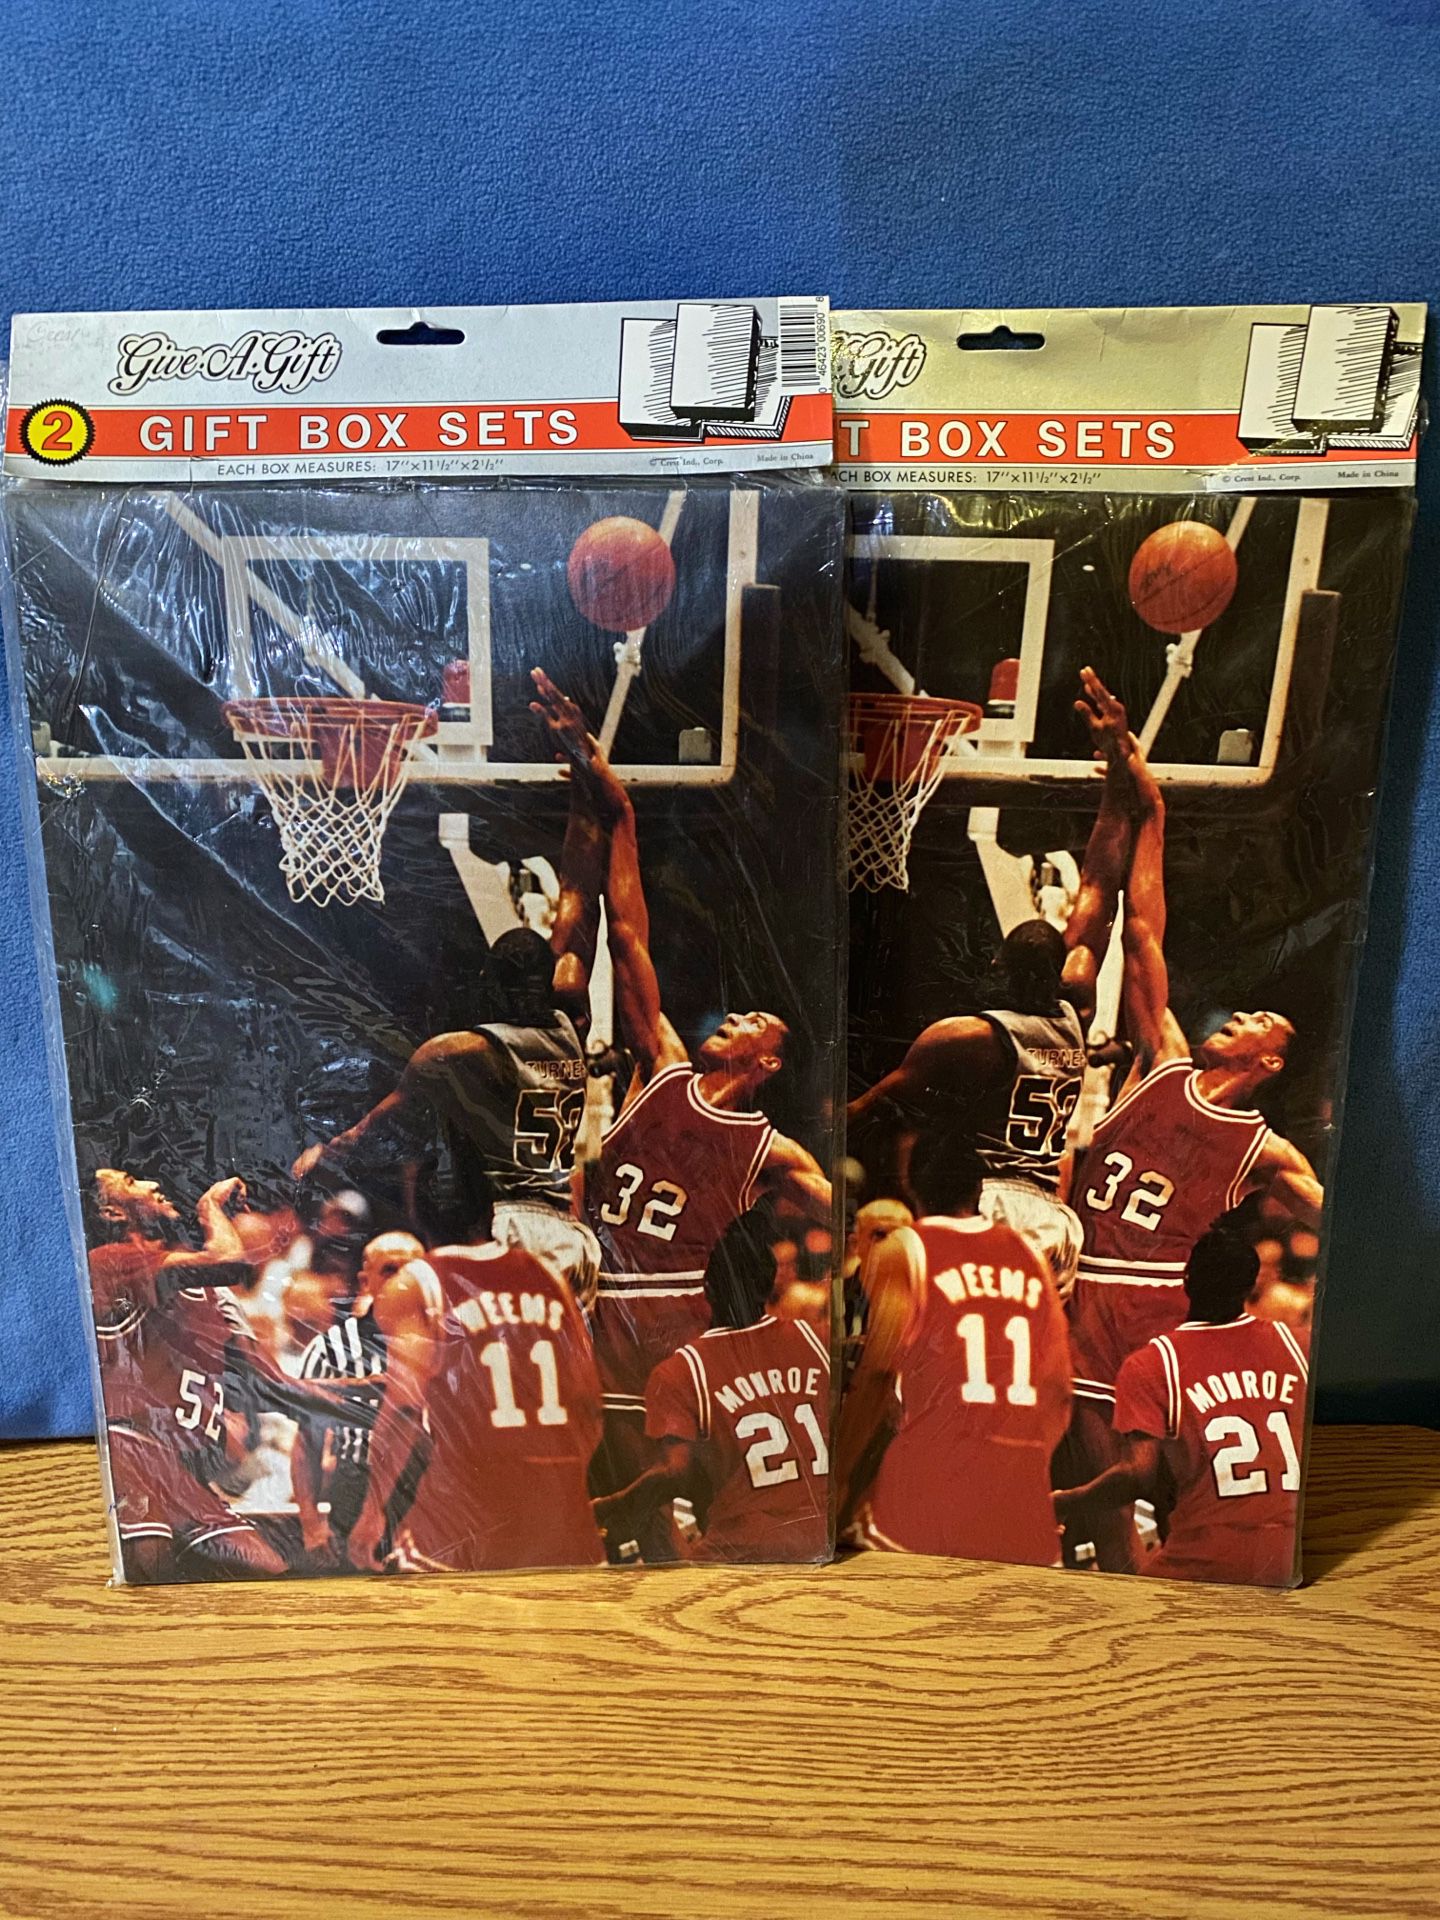 Vintage Basketball Gift Boxes (1990s)